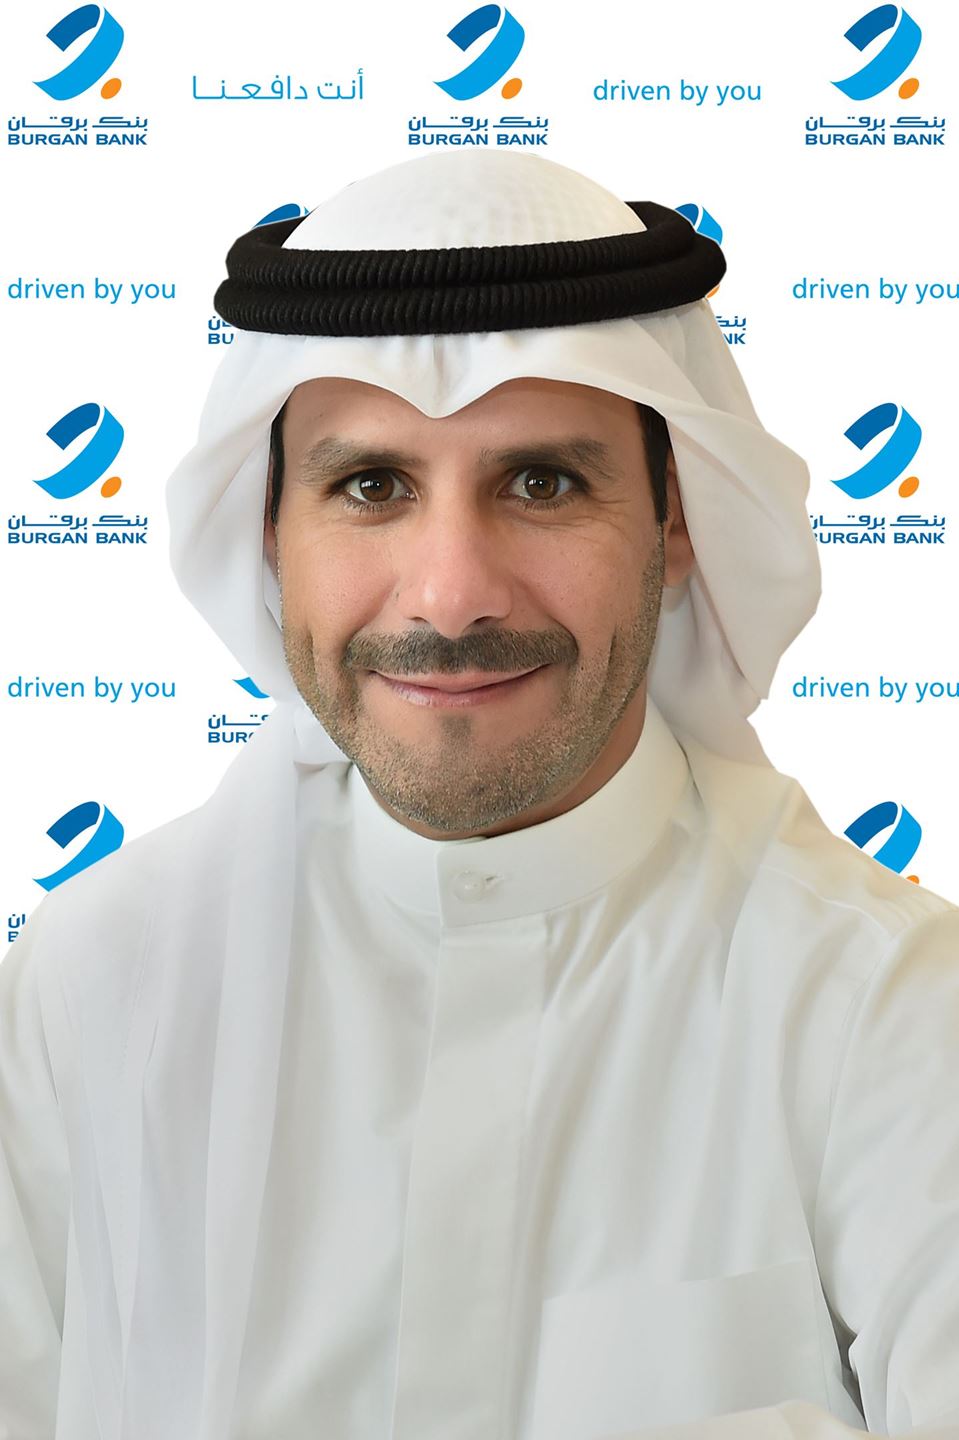 Burgan Bank’s Chairman, Sheikh Abdullah Nasser Sabah Al Ahmad Al-Sabah